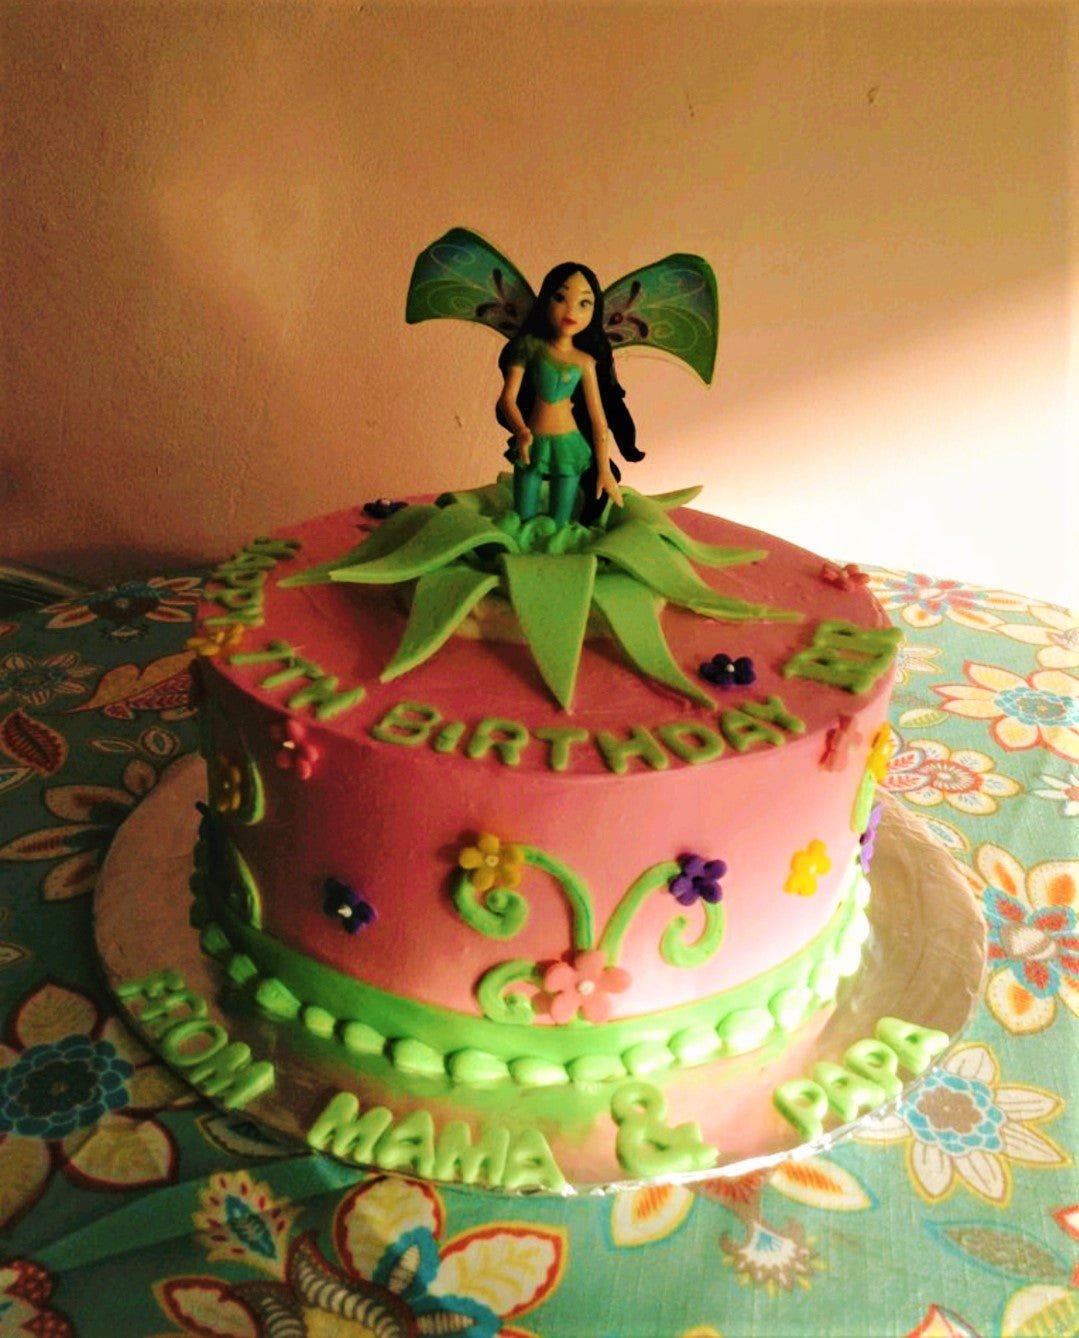 Natalie's Tinkerbell Cake Smash 1 Year Photoshoot. - YouTube